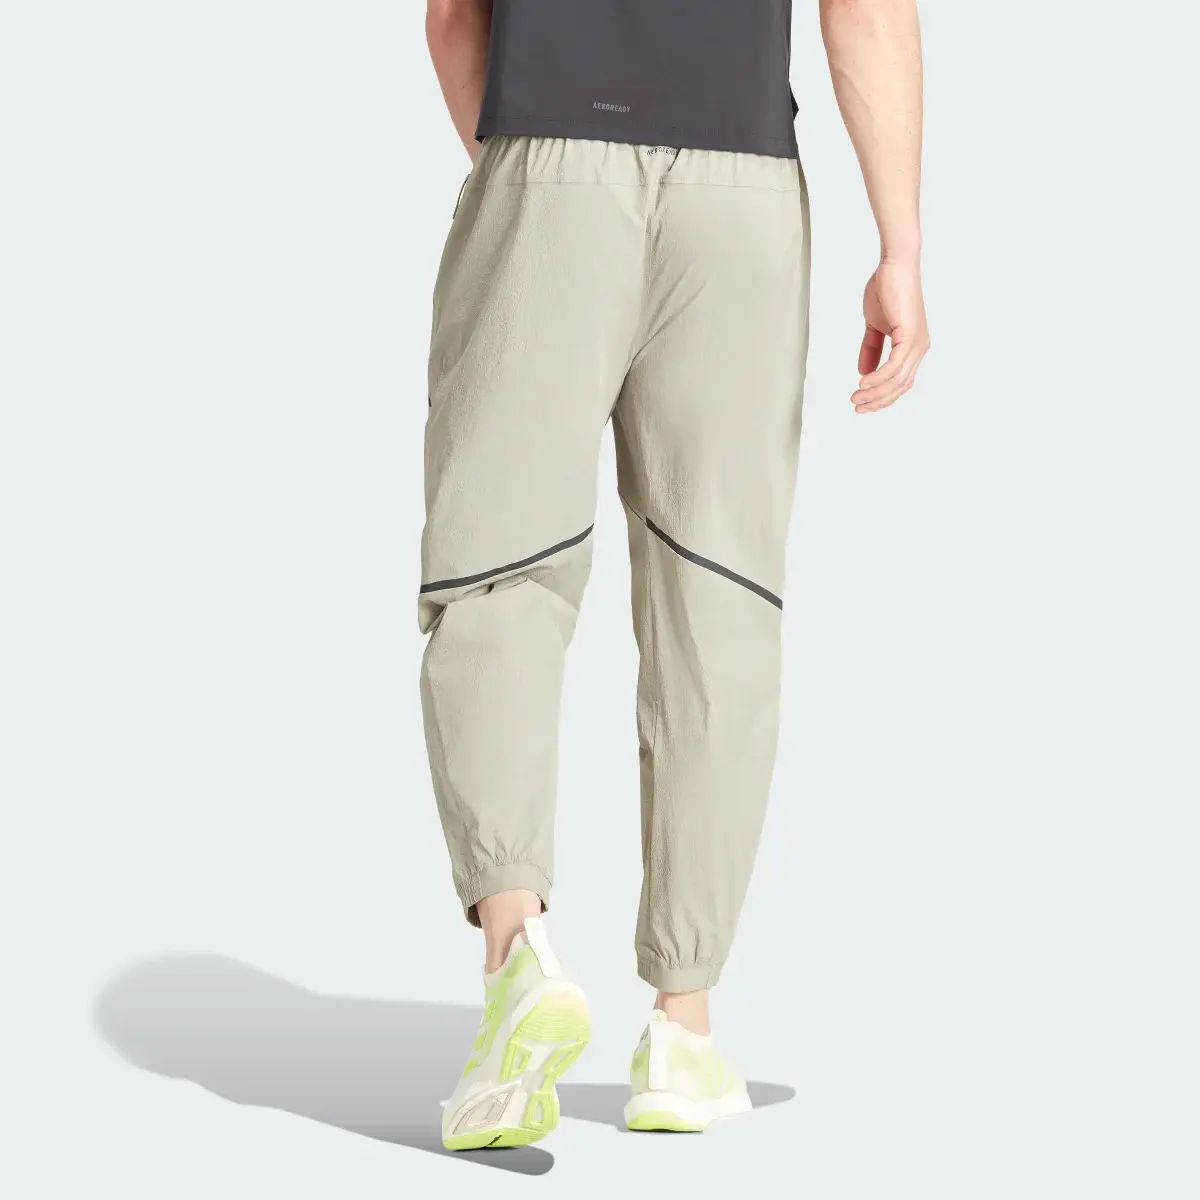 Adidas Pants de Entrenamiento Designed for Training Adistrong. 3